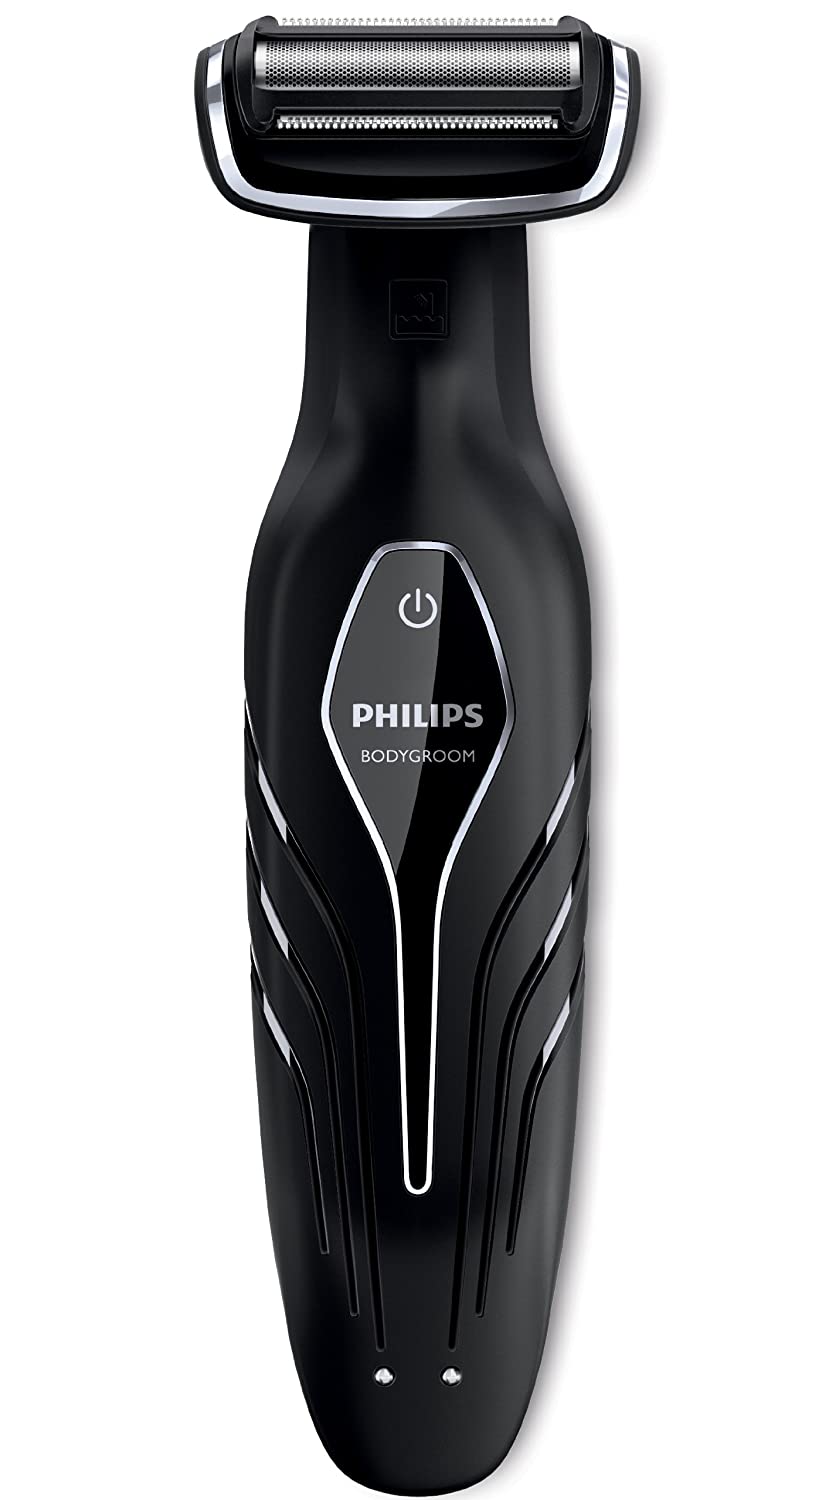 Philips Bodygroom Series 3000 Washable Showerproof Cordless Body